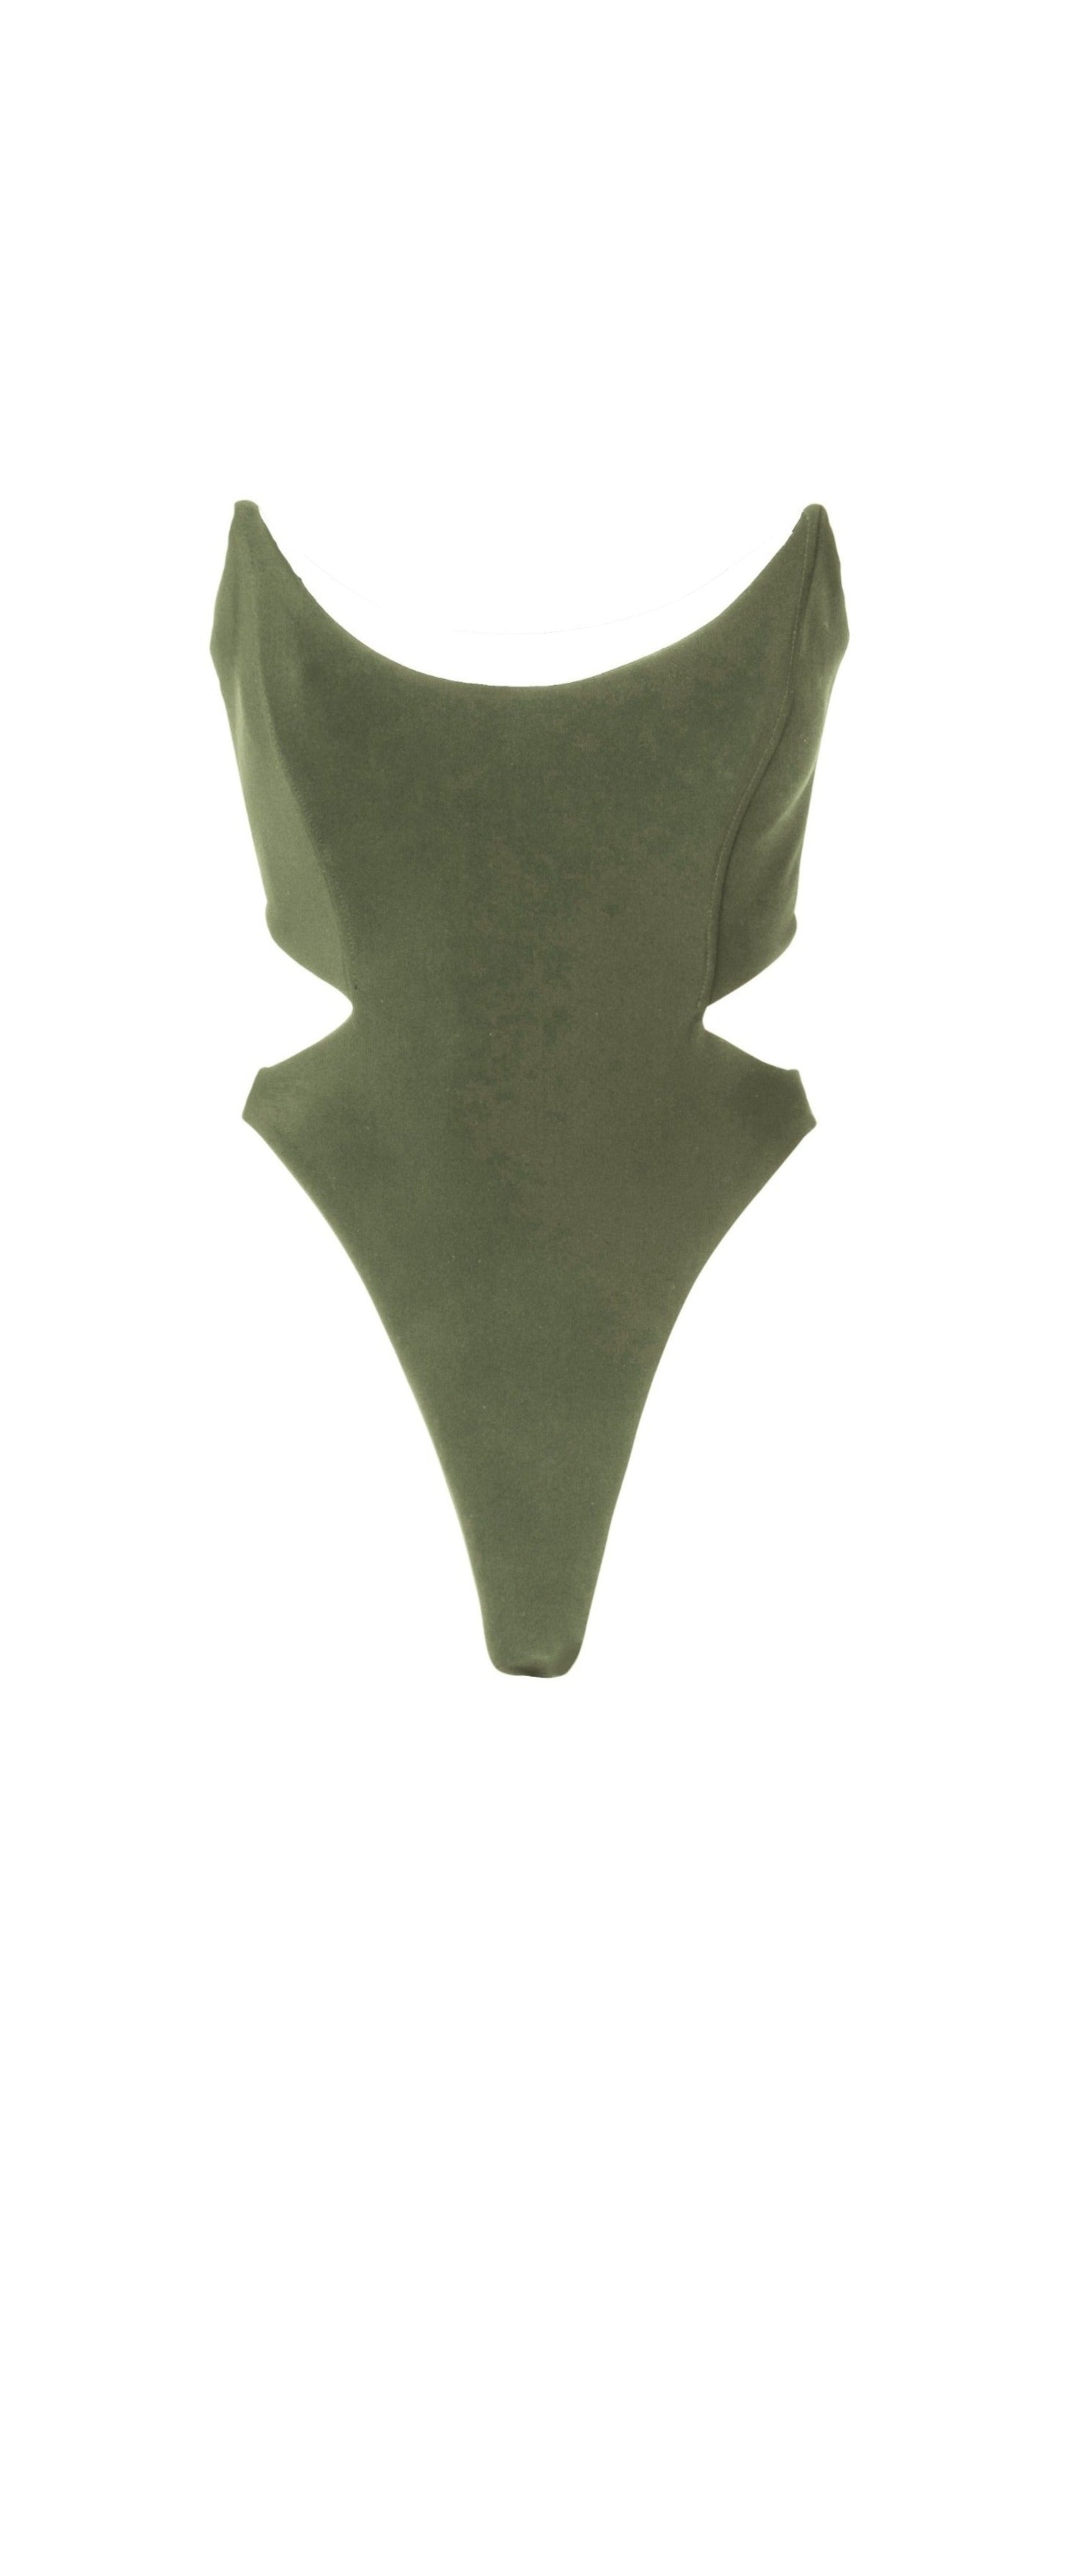 Hemera Bodysuit - Olive Green